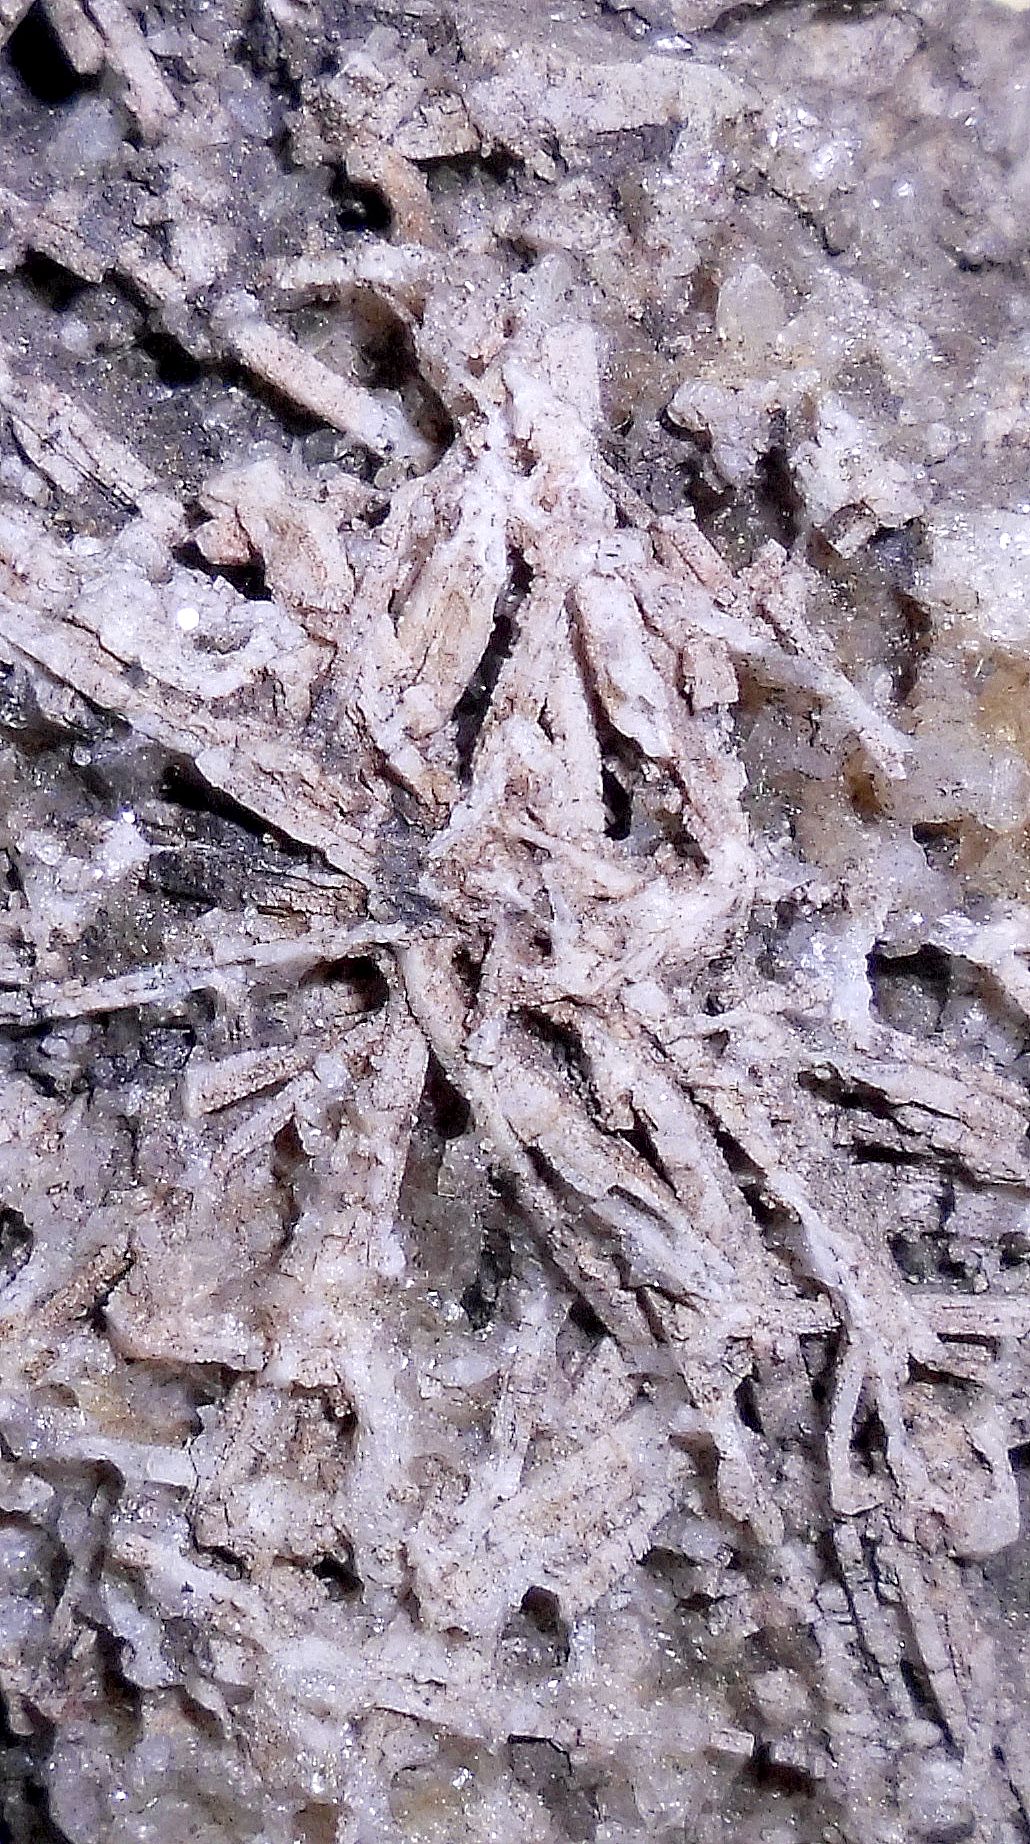 Pseudomorfóza - krystaly křemene po barytu.